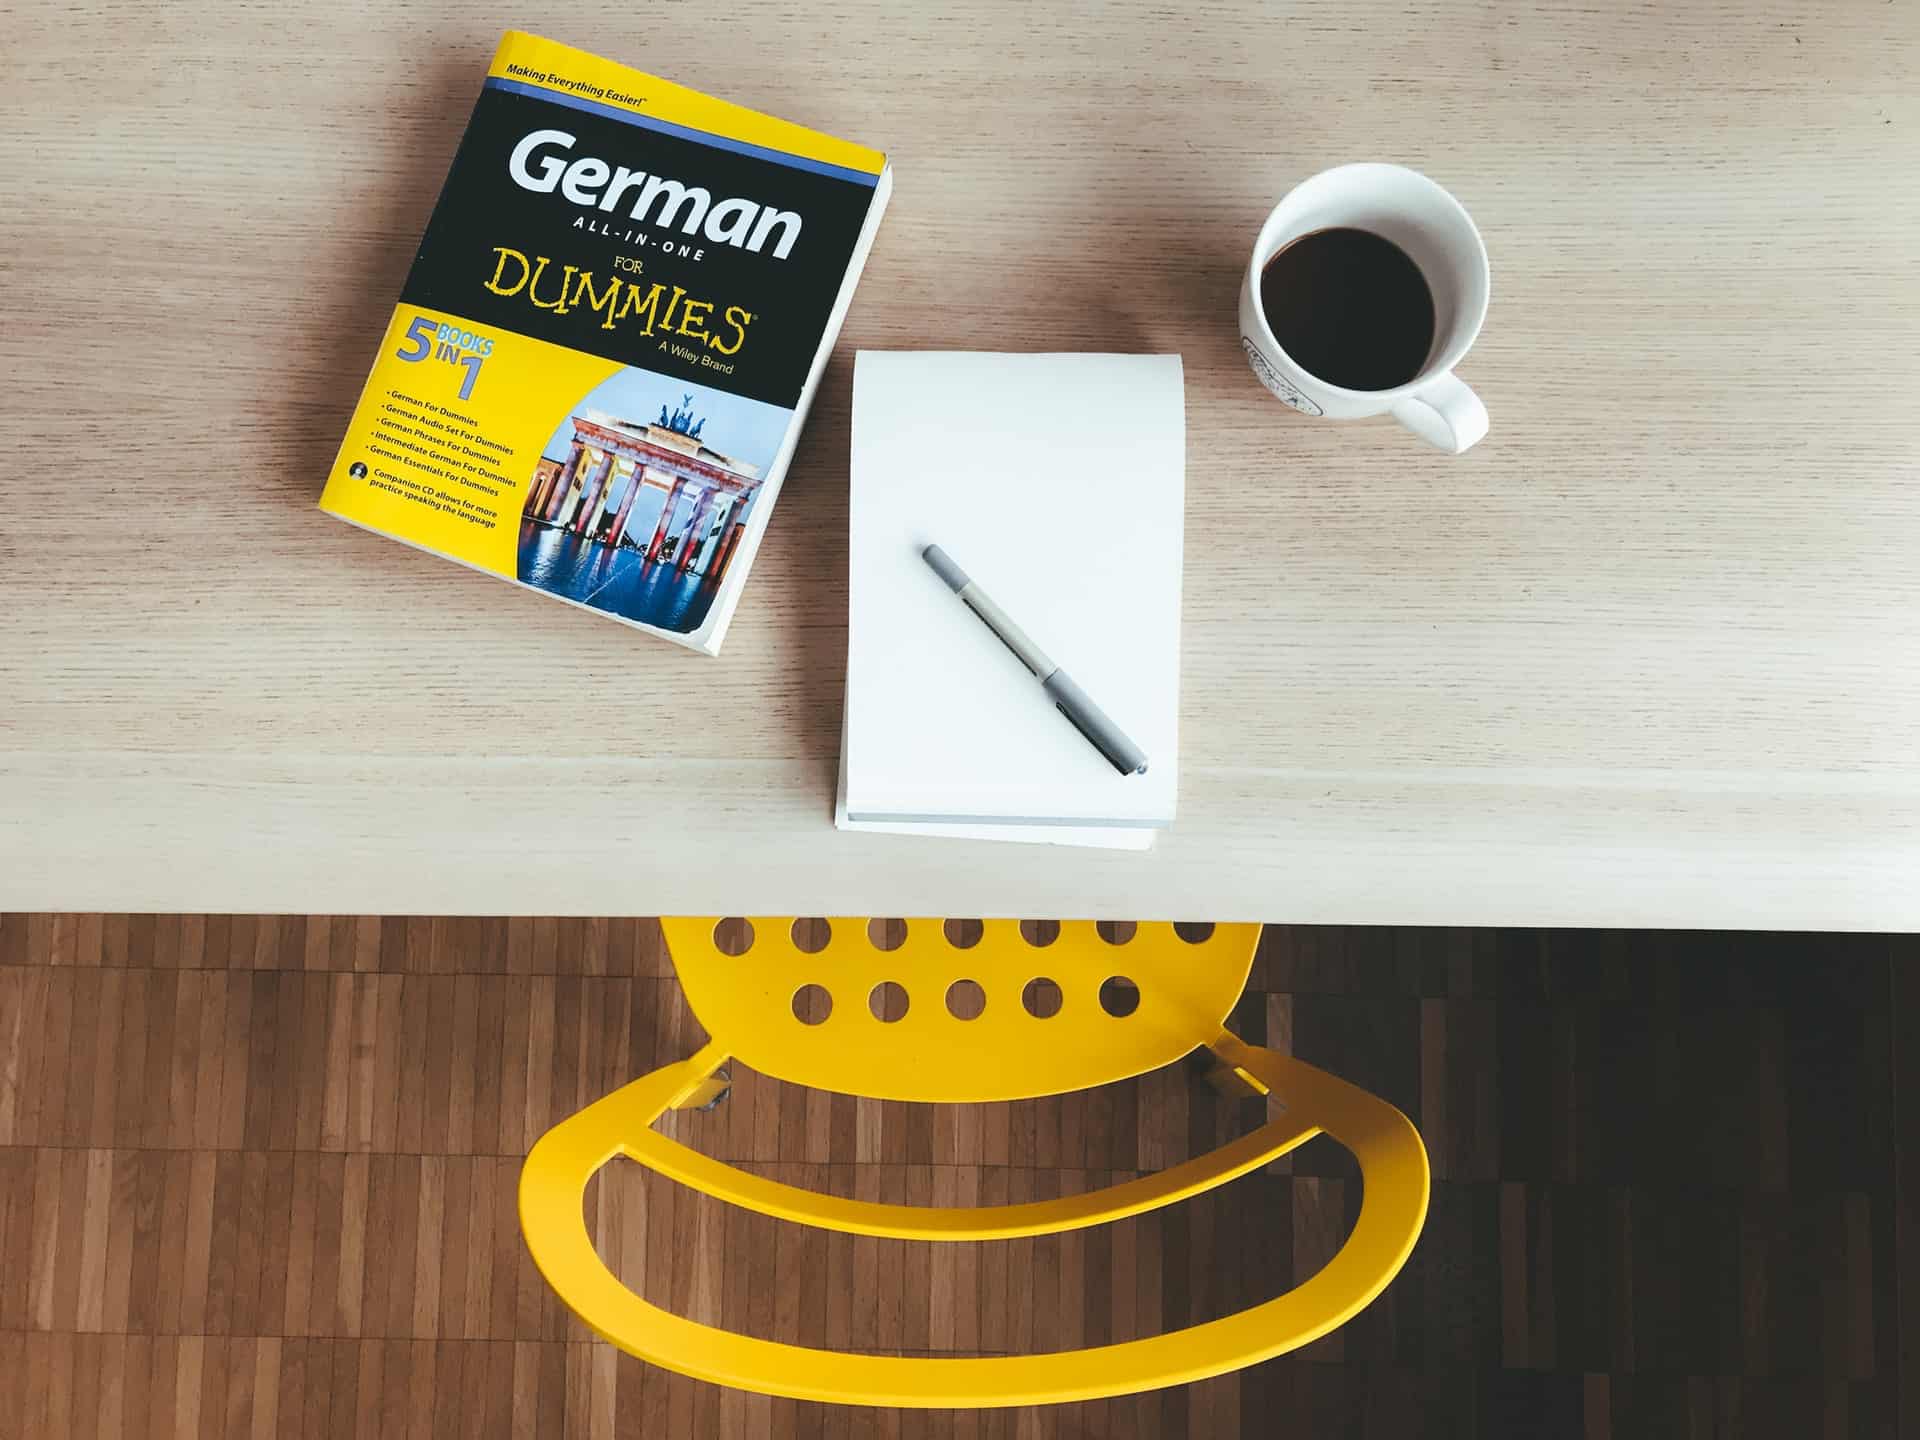 German for dummies book